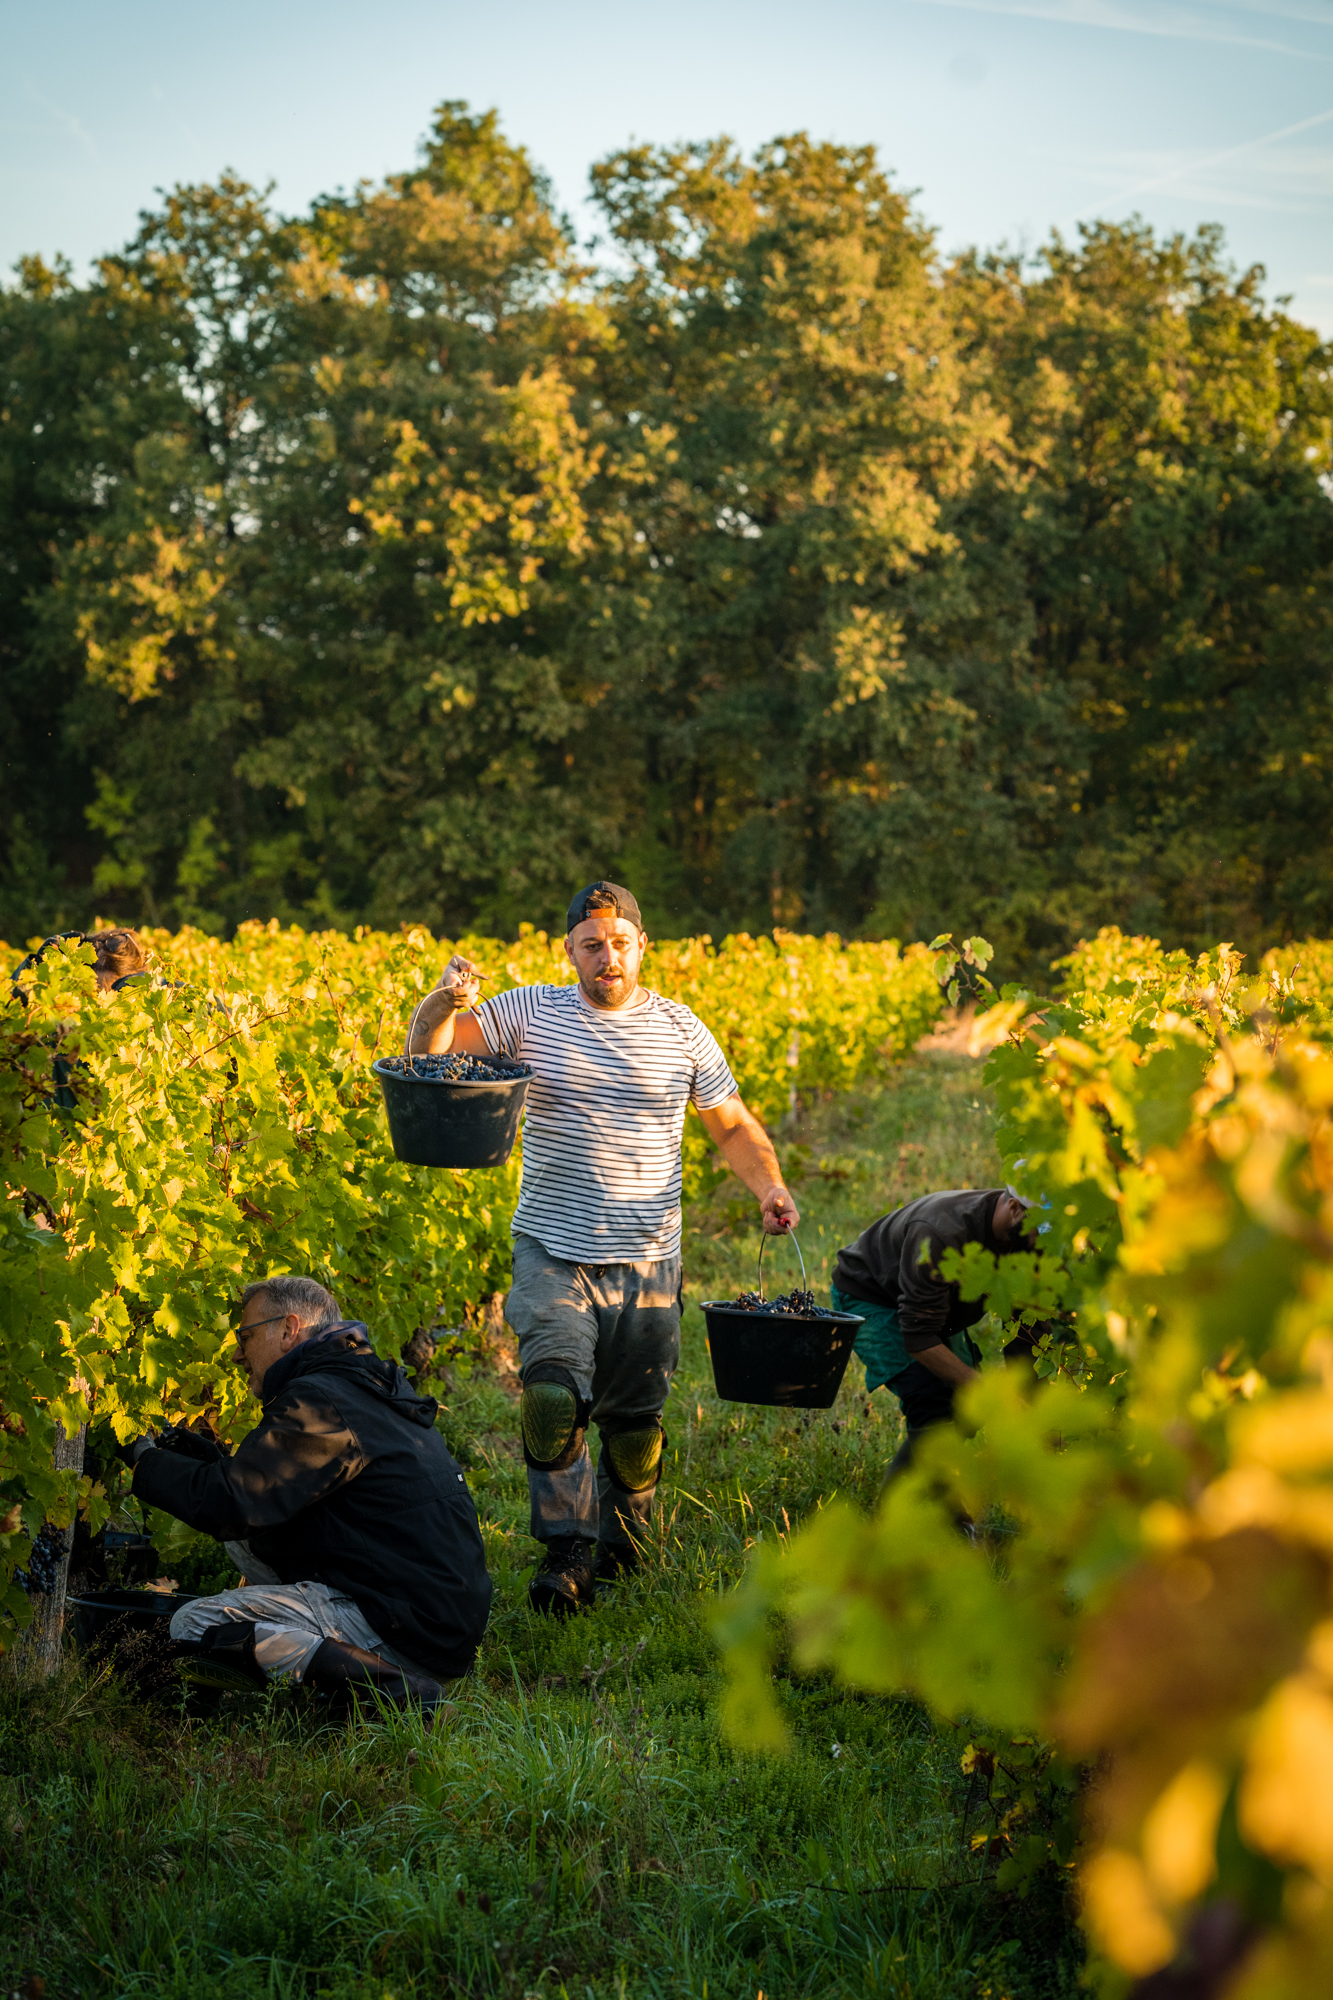 Reportage photo viticulture vigneron vignoble vin terroir agriculture